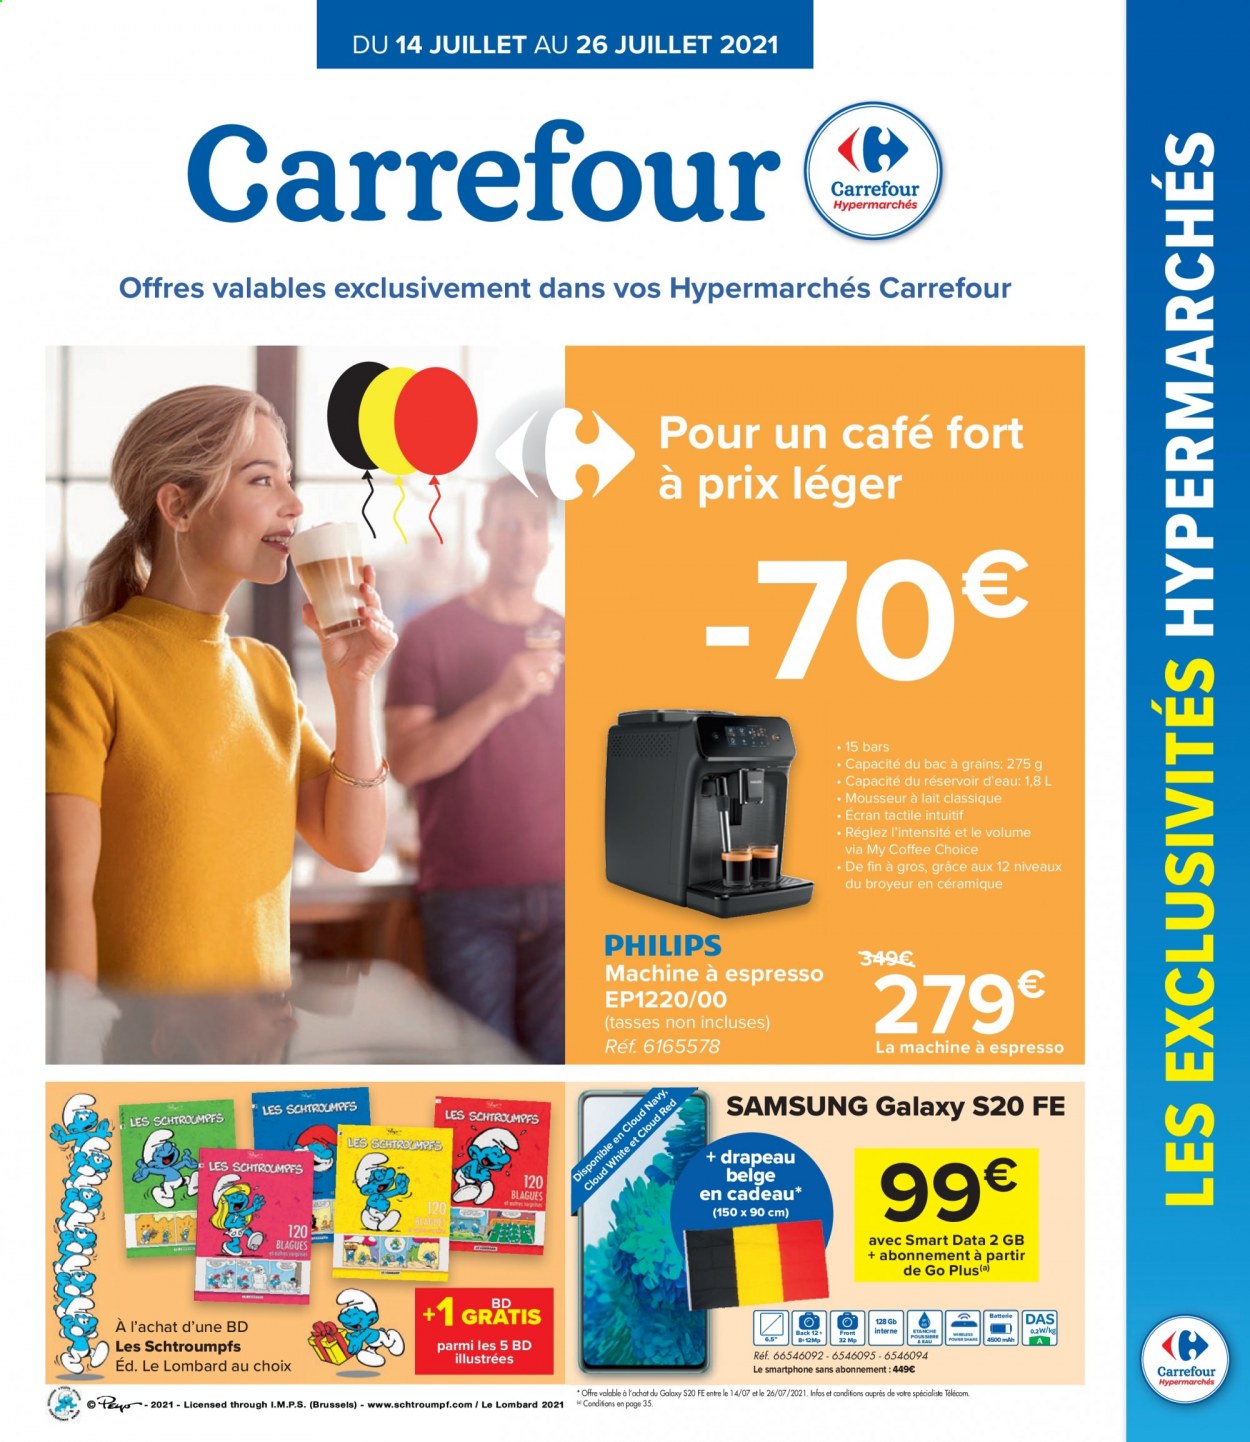 thumbnail - Carrefour hypermarkt-aanbieding - 14/07/2021 - 26/07/2021 -  producten in de aanbieding - Espresso, Samsung, smartphone, Samsung Galaxy S20. Pagina 1.